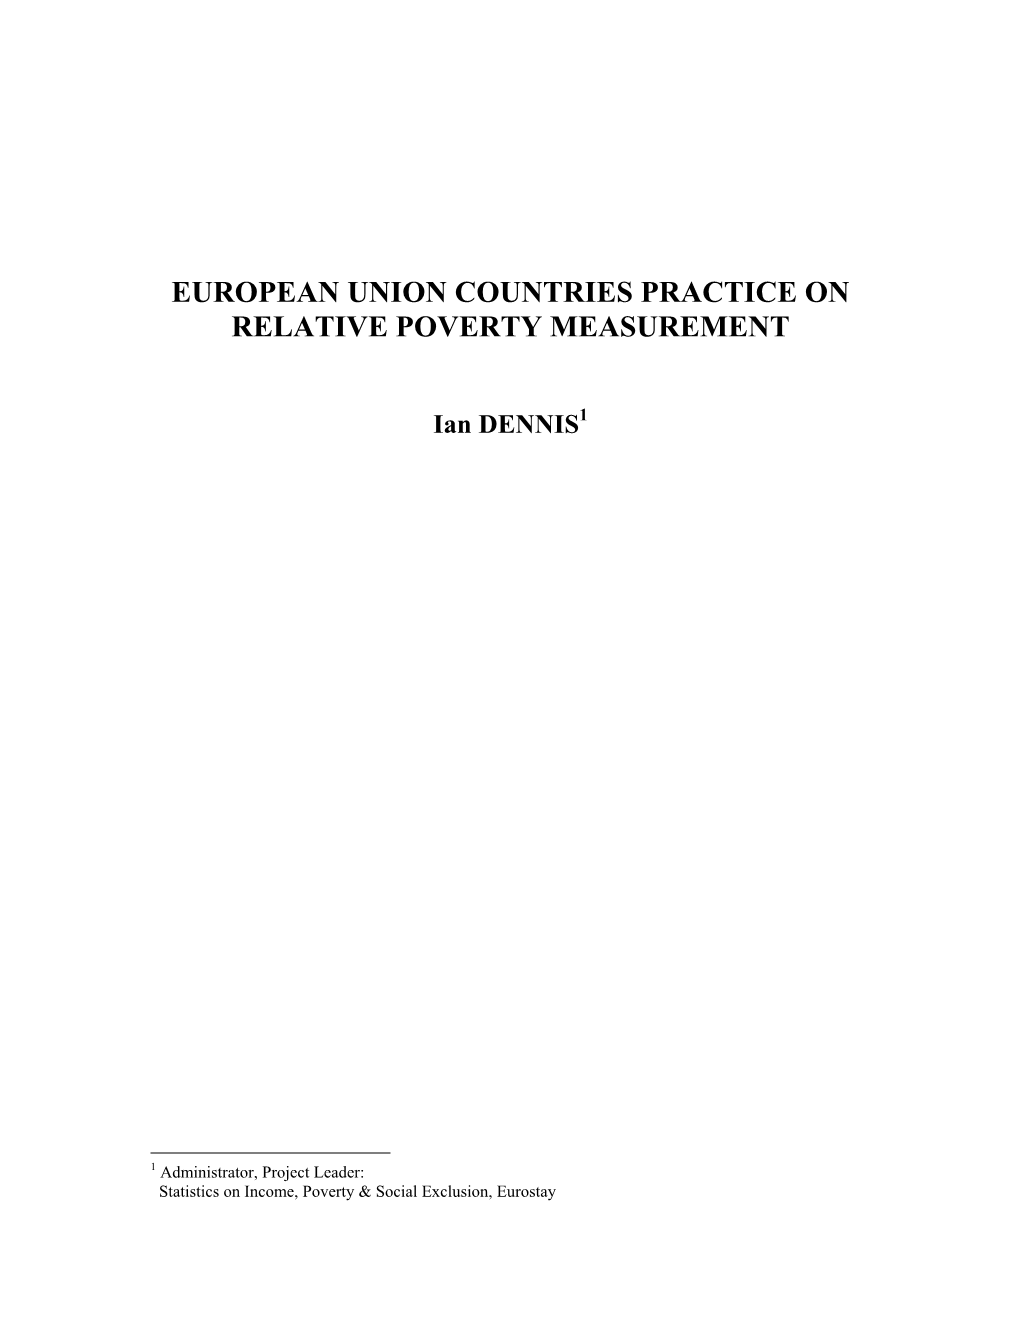 European Union Countries Practice on Relative Poverty Measurement